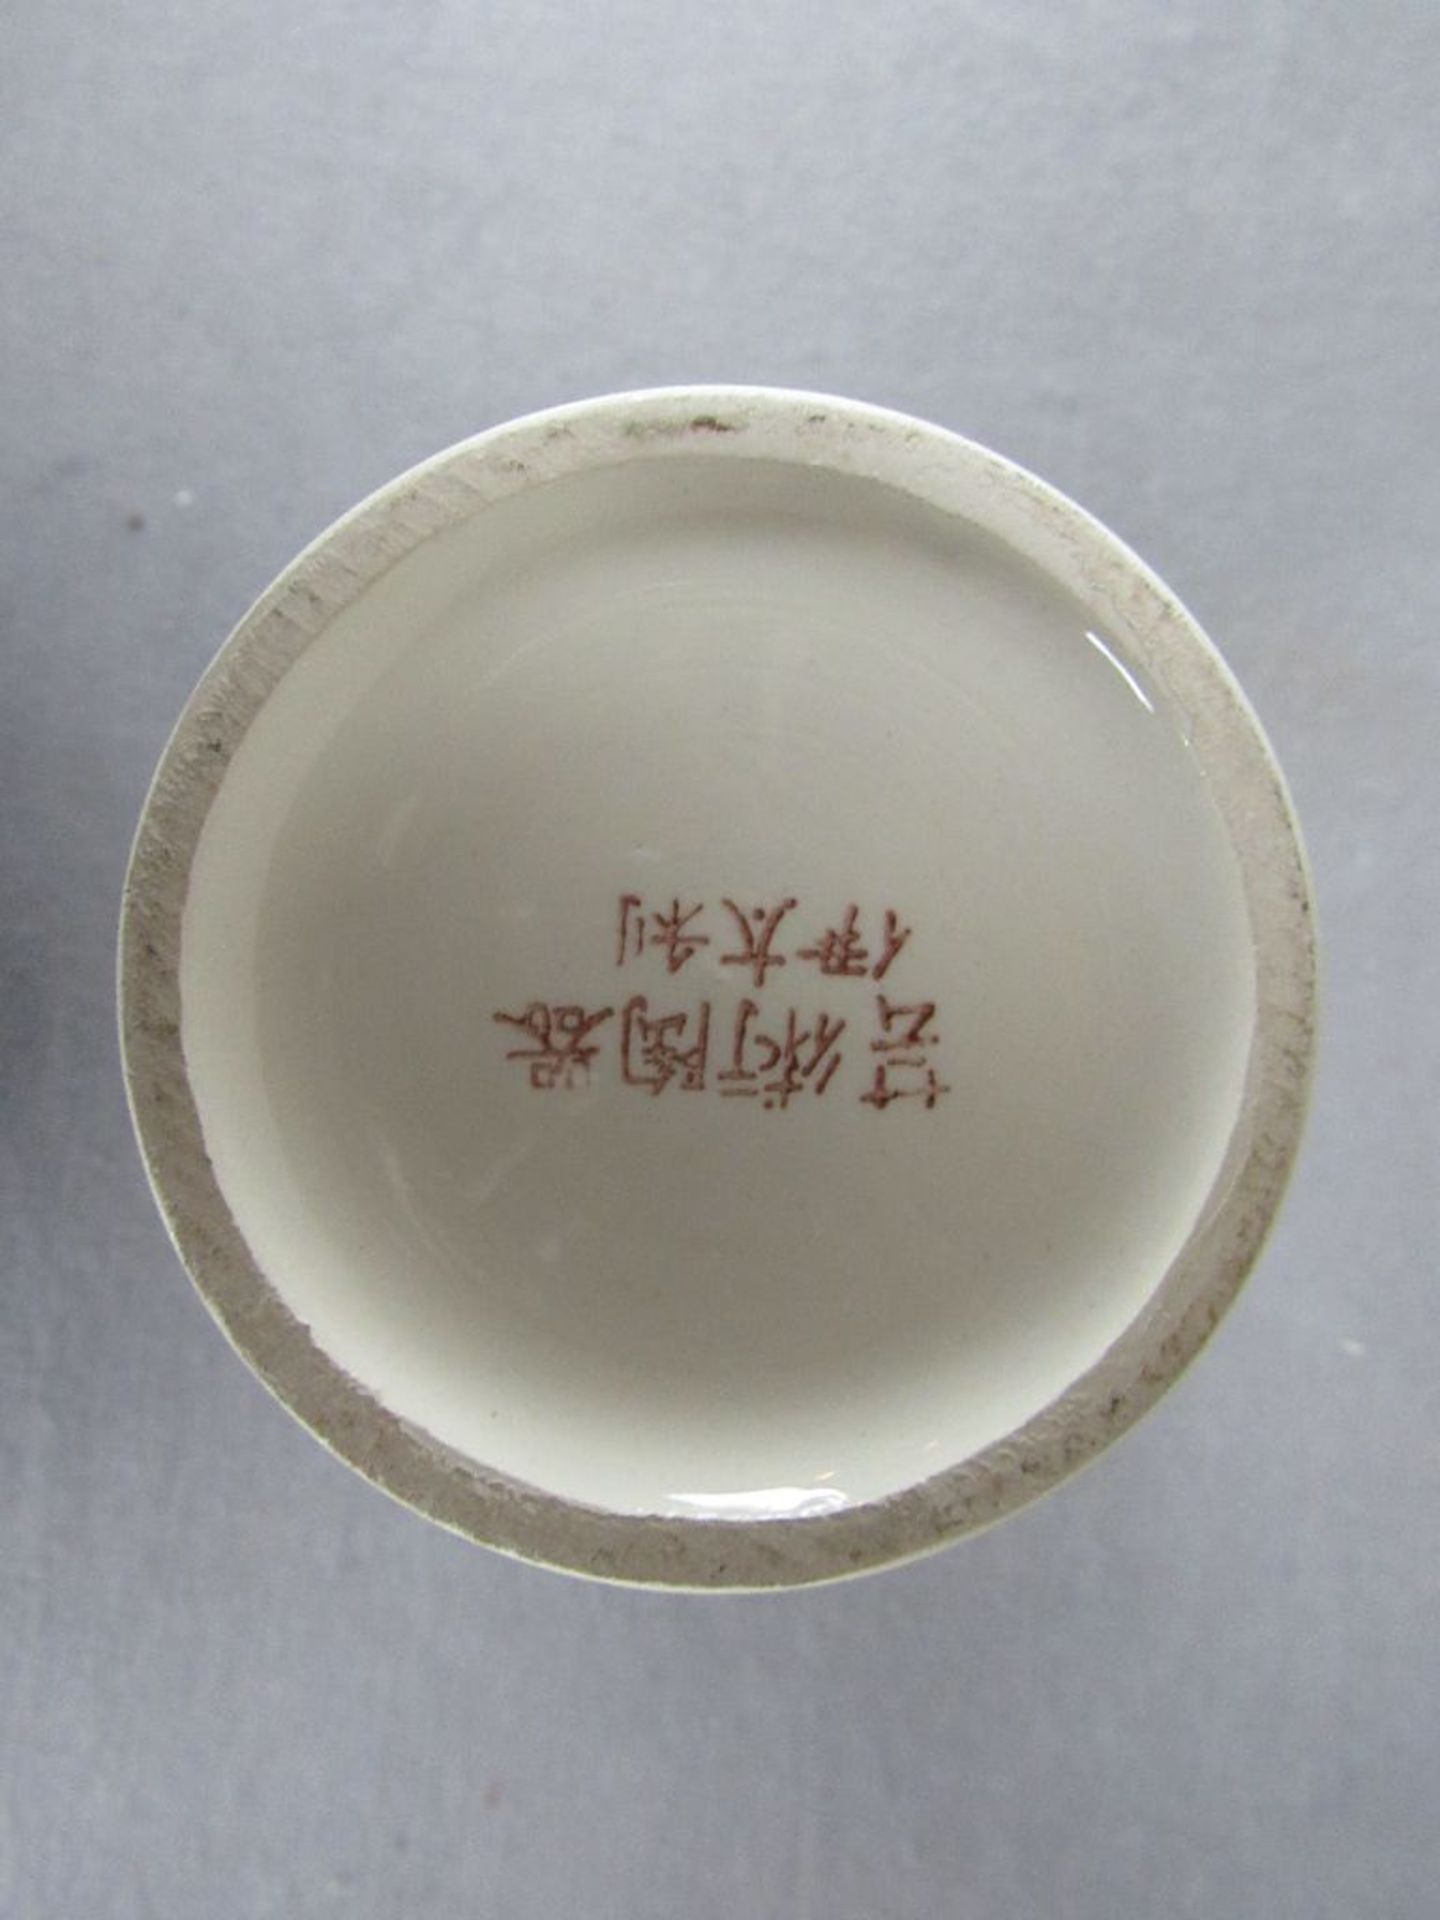 Vase asiatisch Keramik 26cm hoch gemarkt - Image 4 of 4